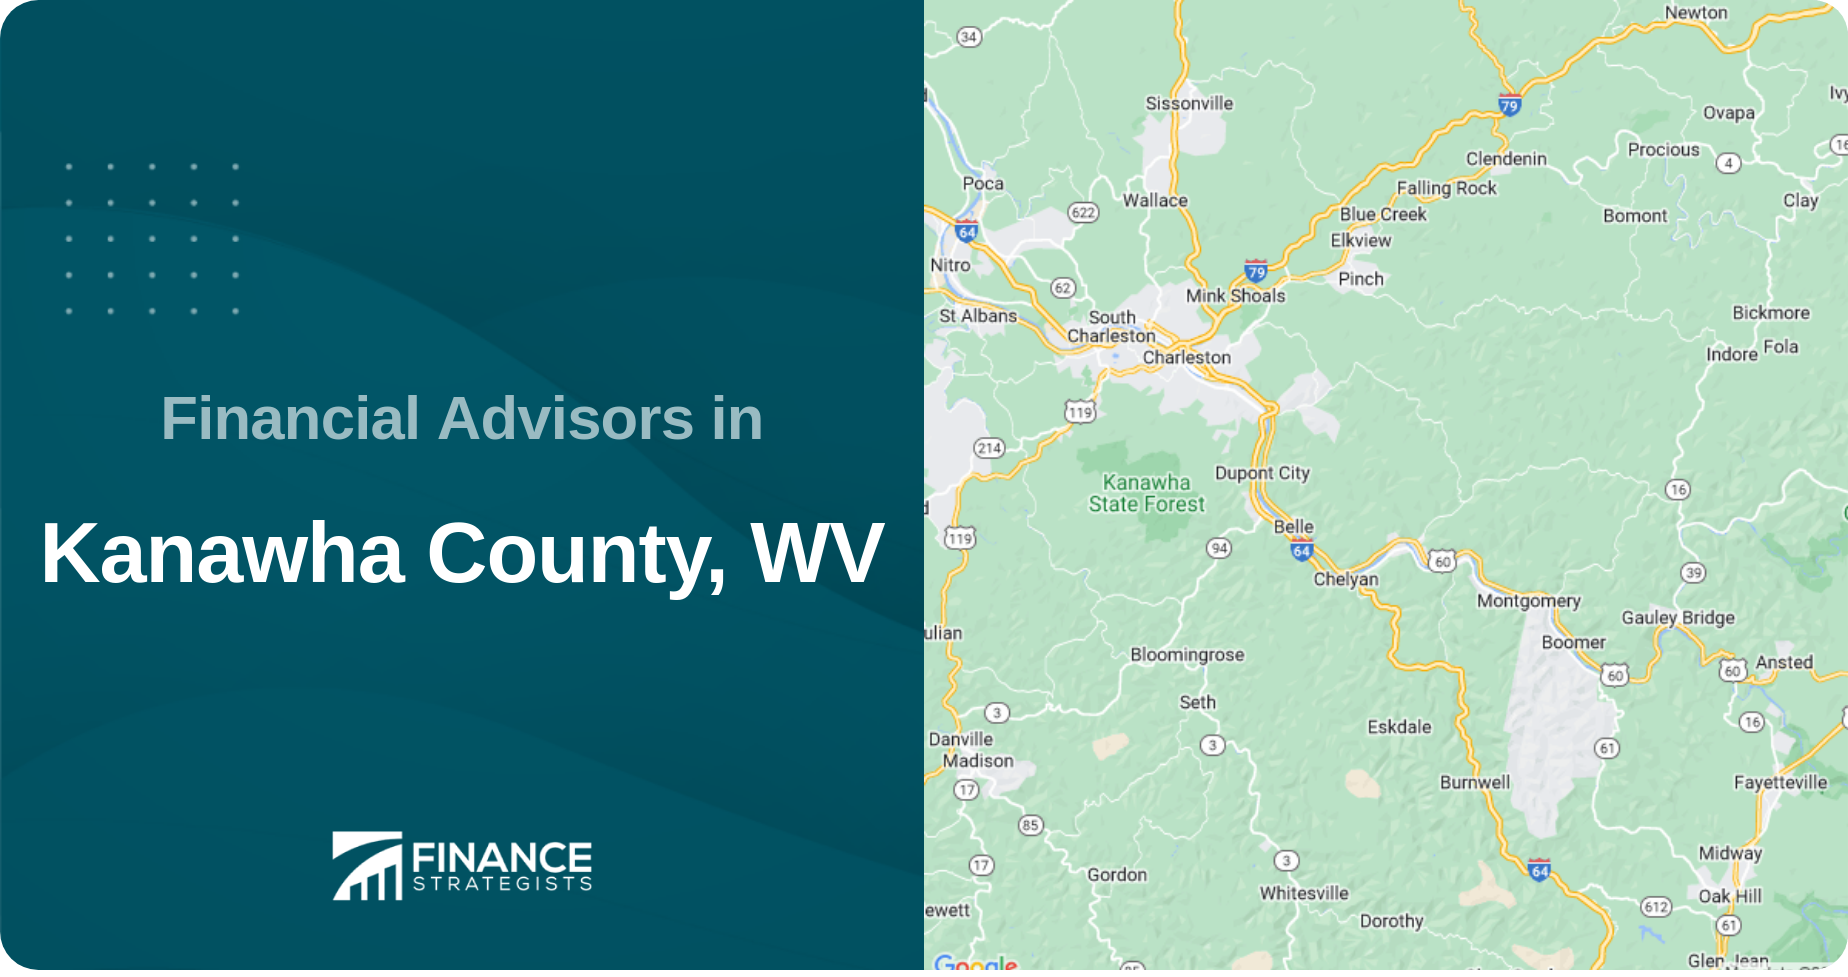 Financial Advisors in Kanawha County, WV